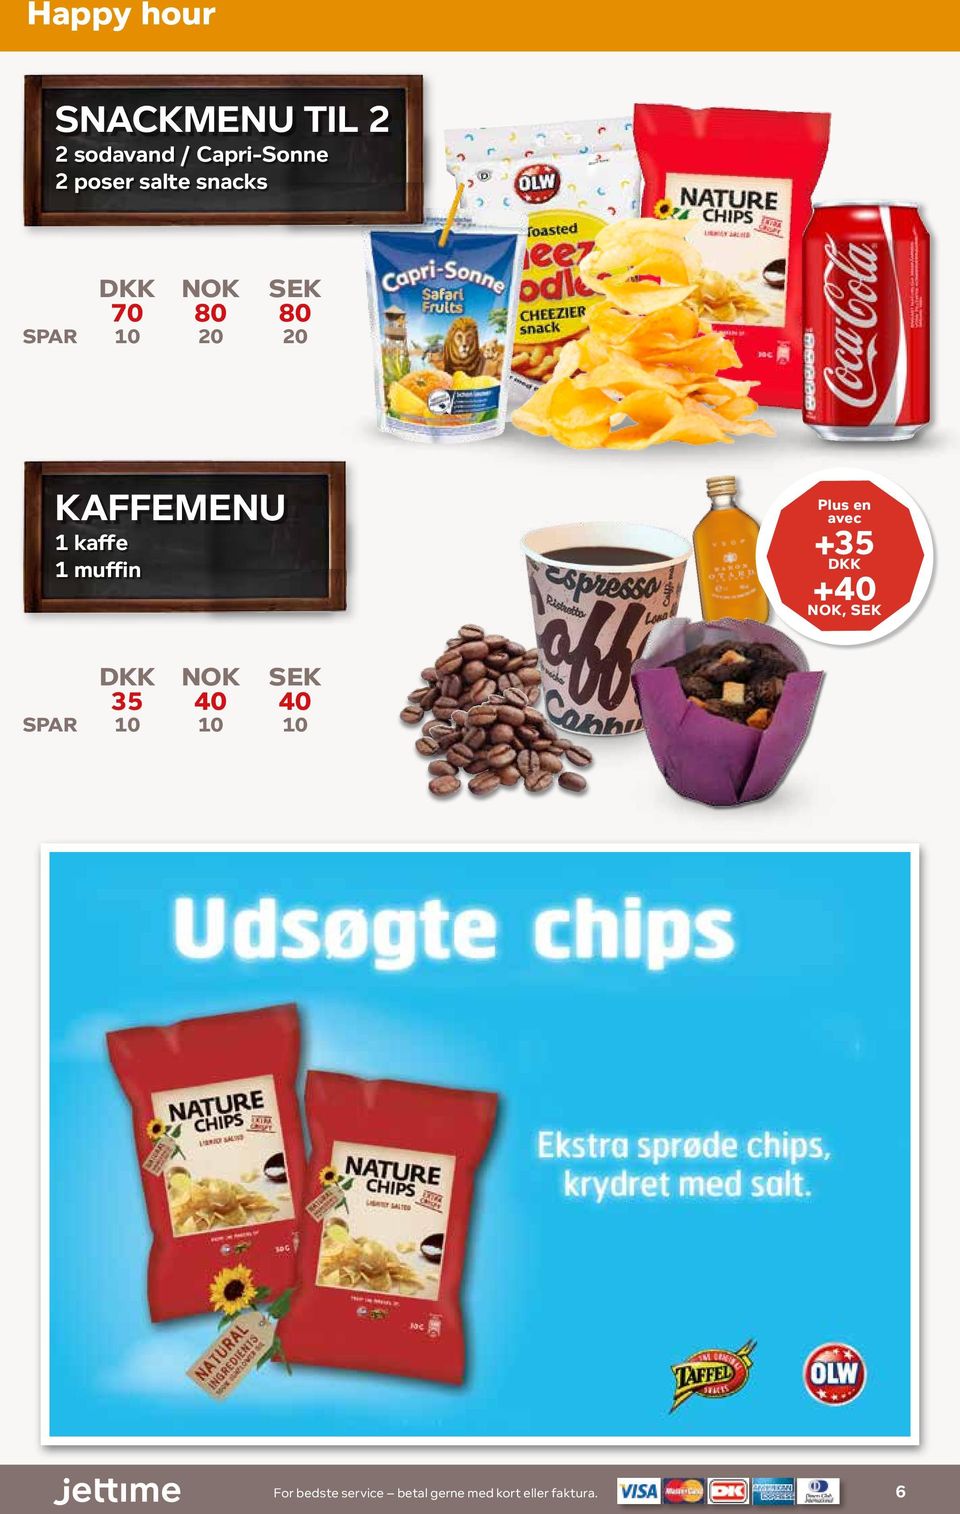 kaffe 1 muffin Plus en avec +35 DKK +40 NOK, SEK SPAR DKK 35 10